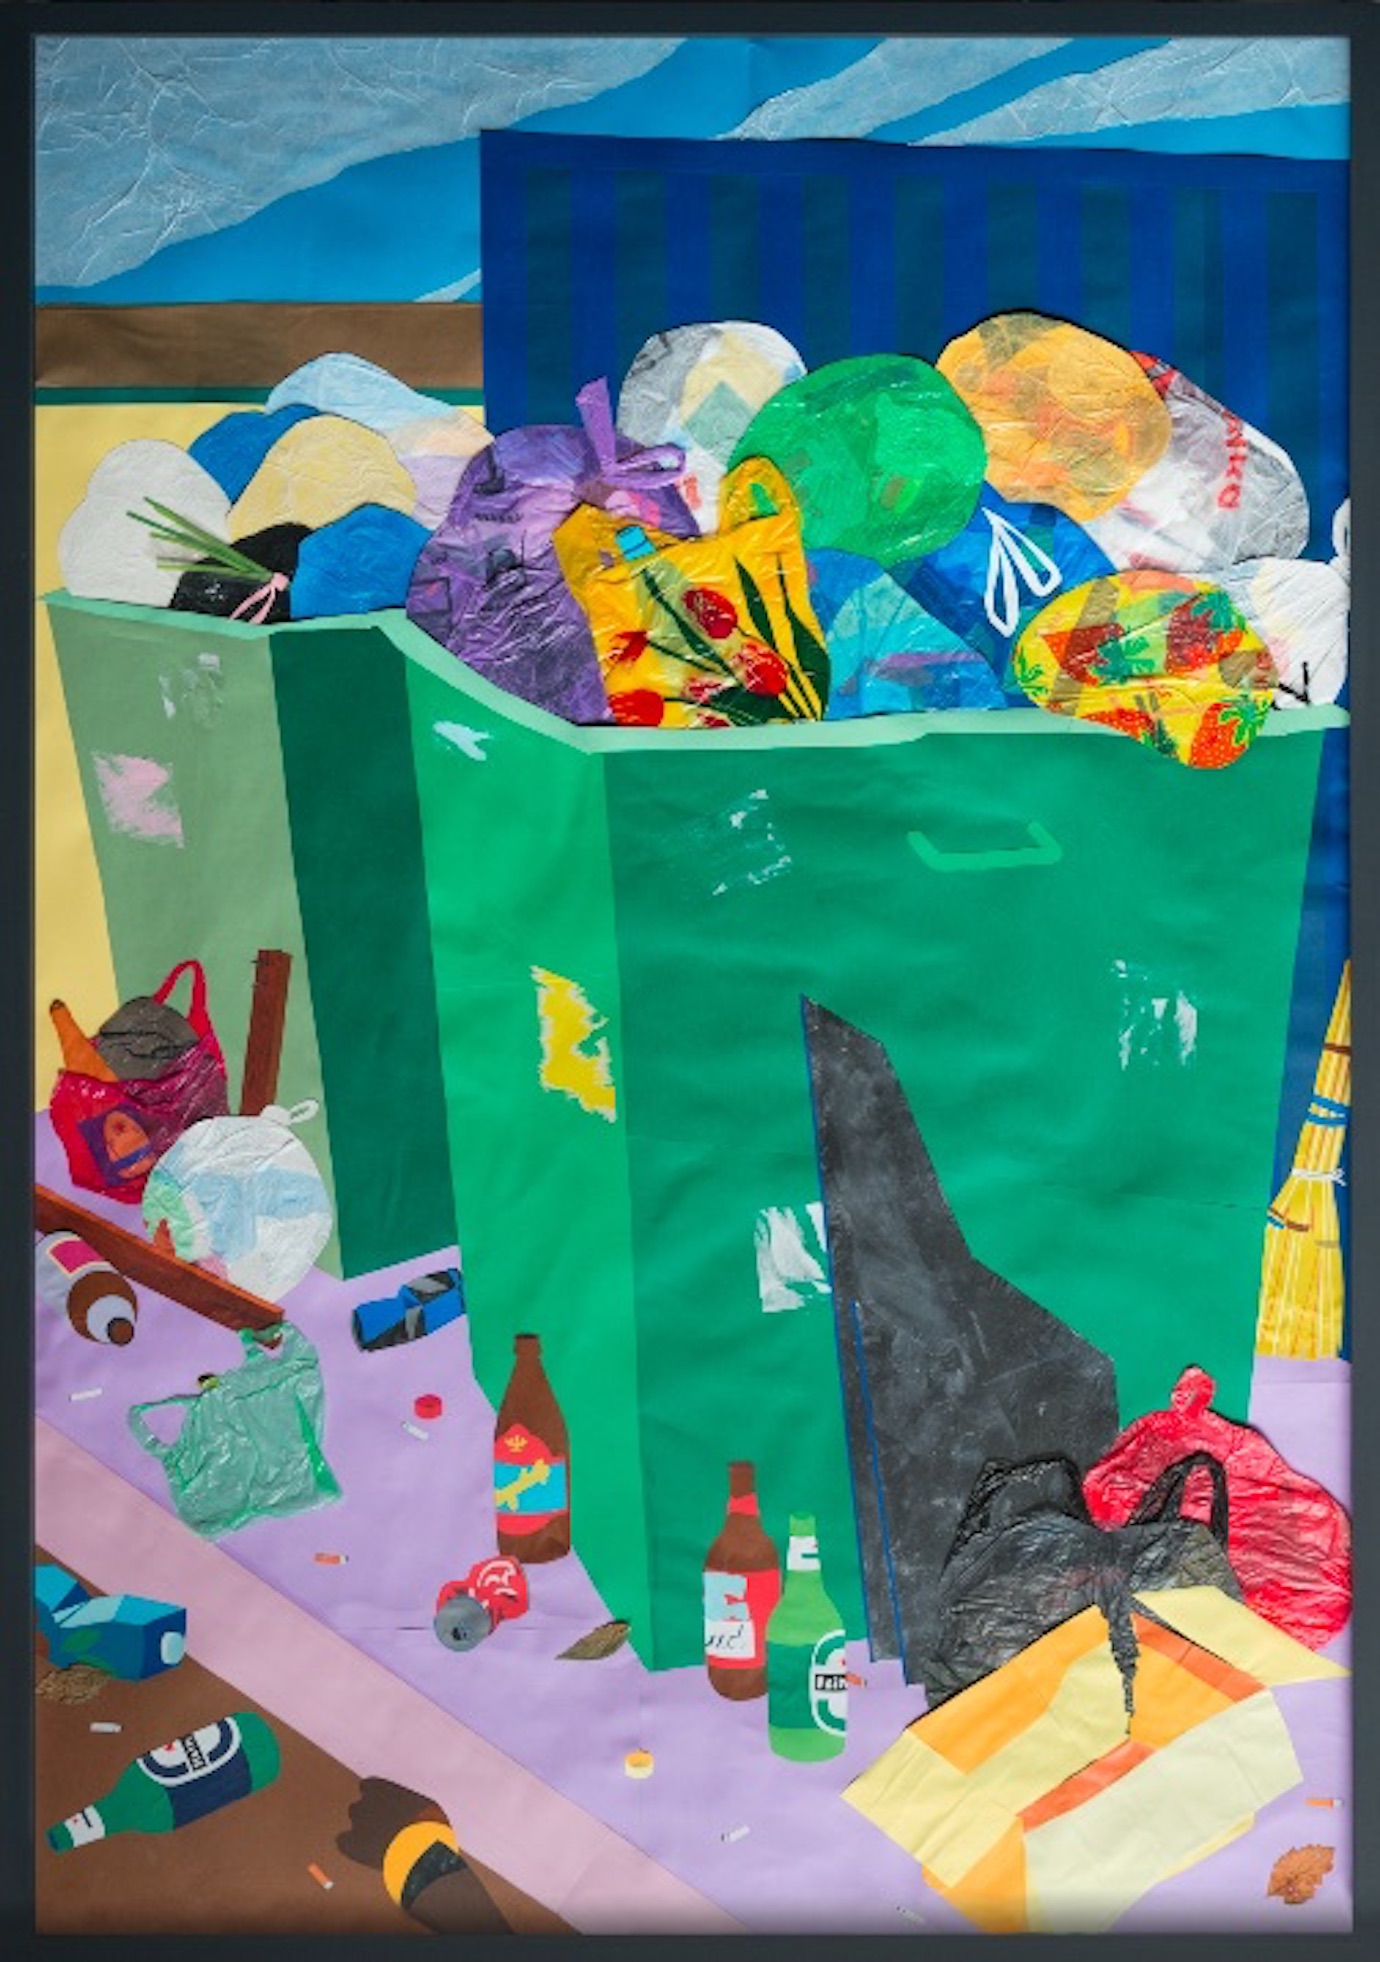 Image: Waste bins, containers, bins, by Zina Isupova